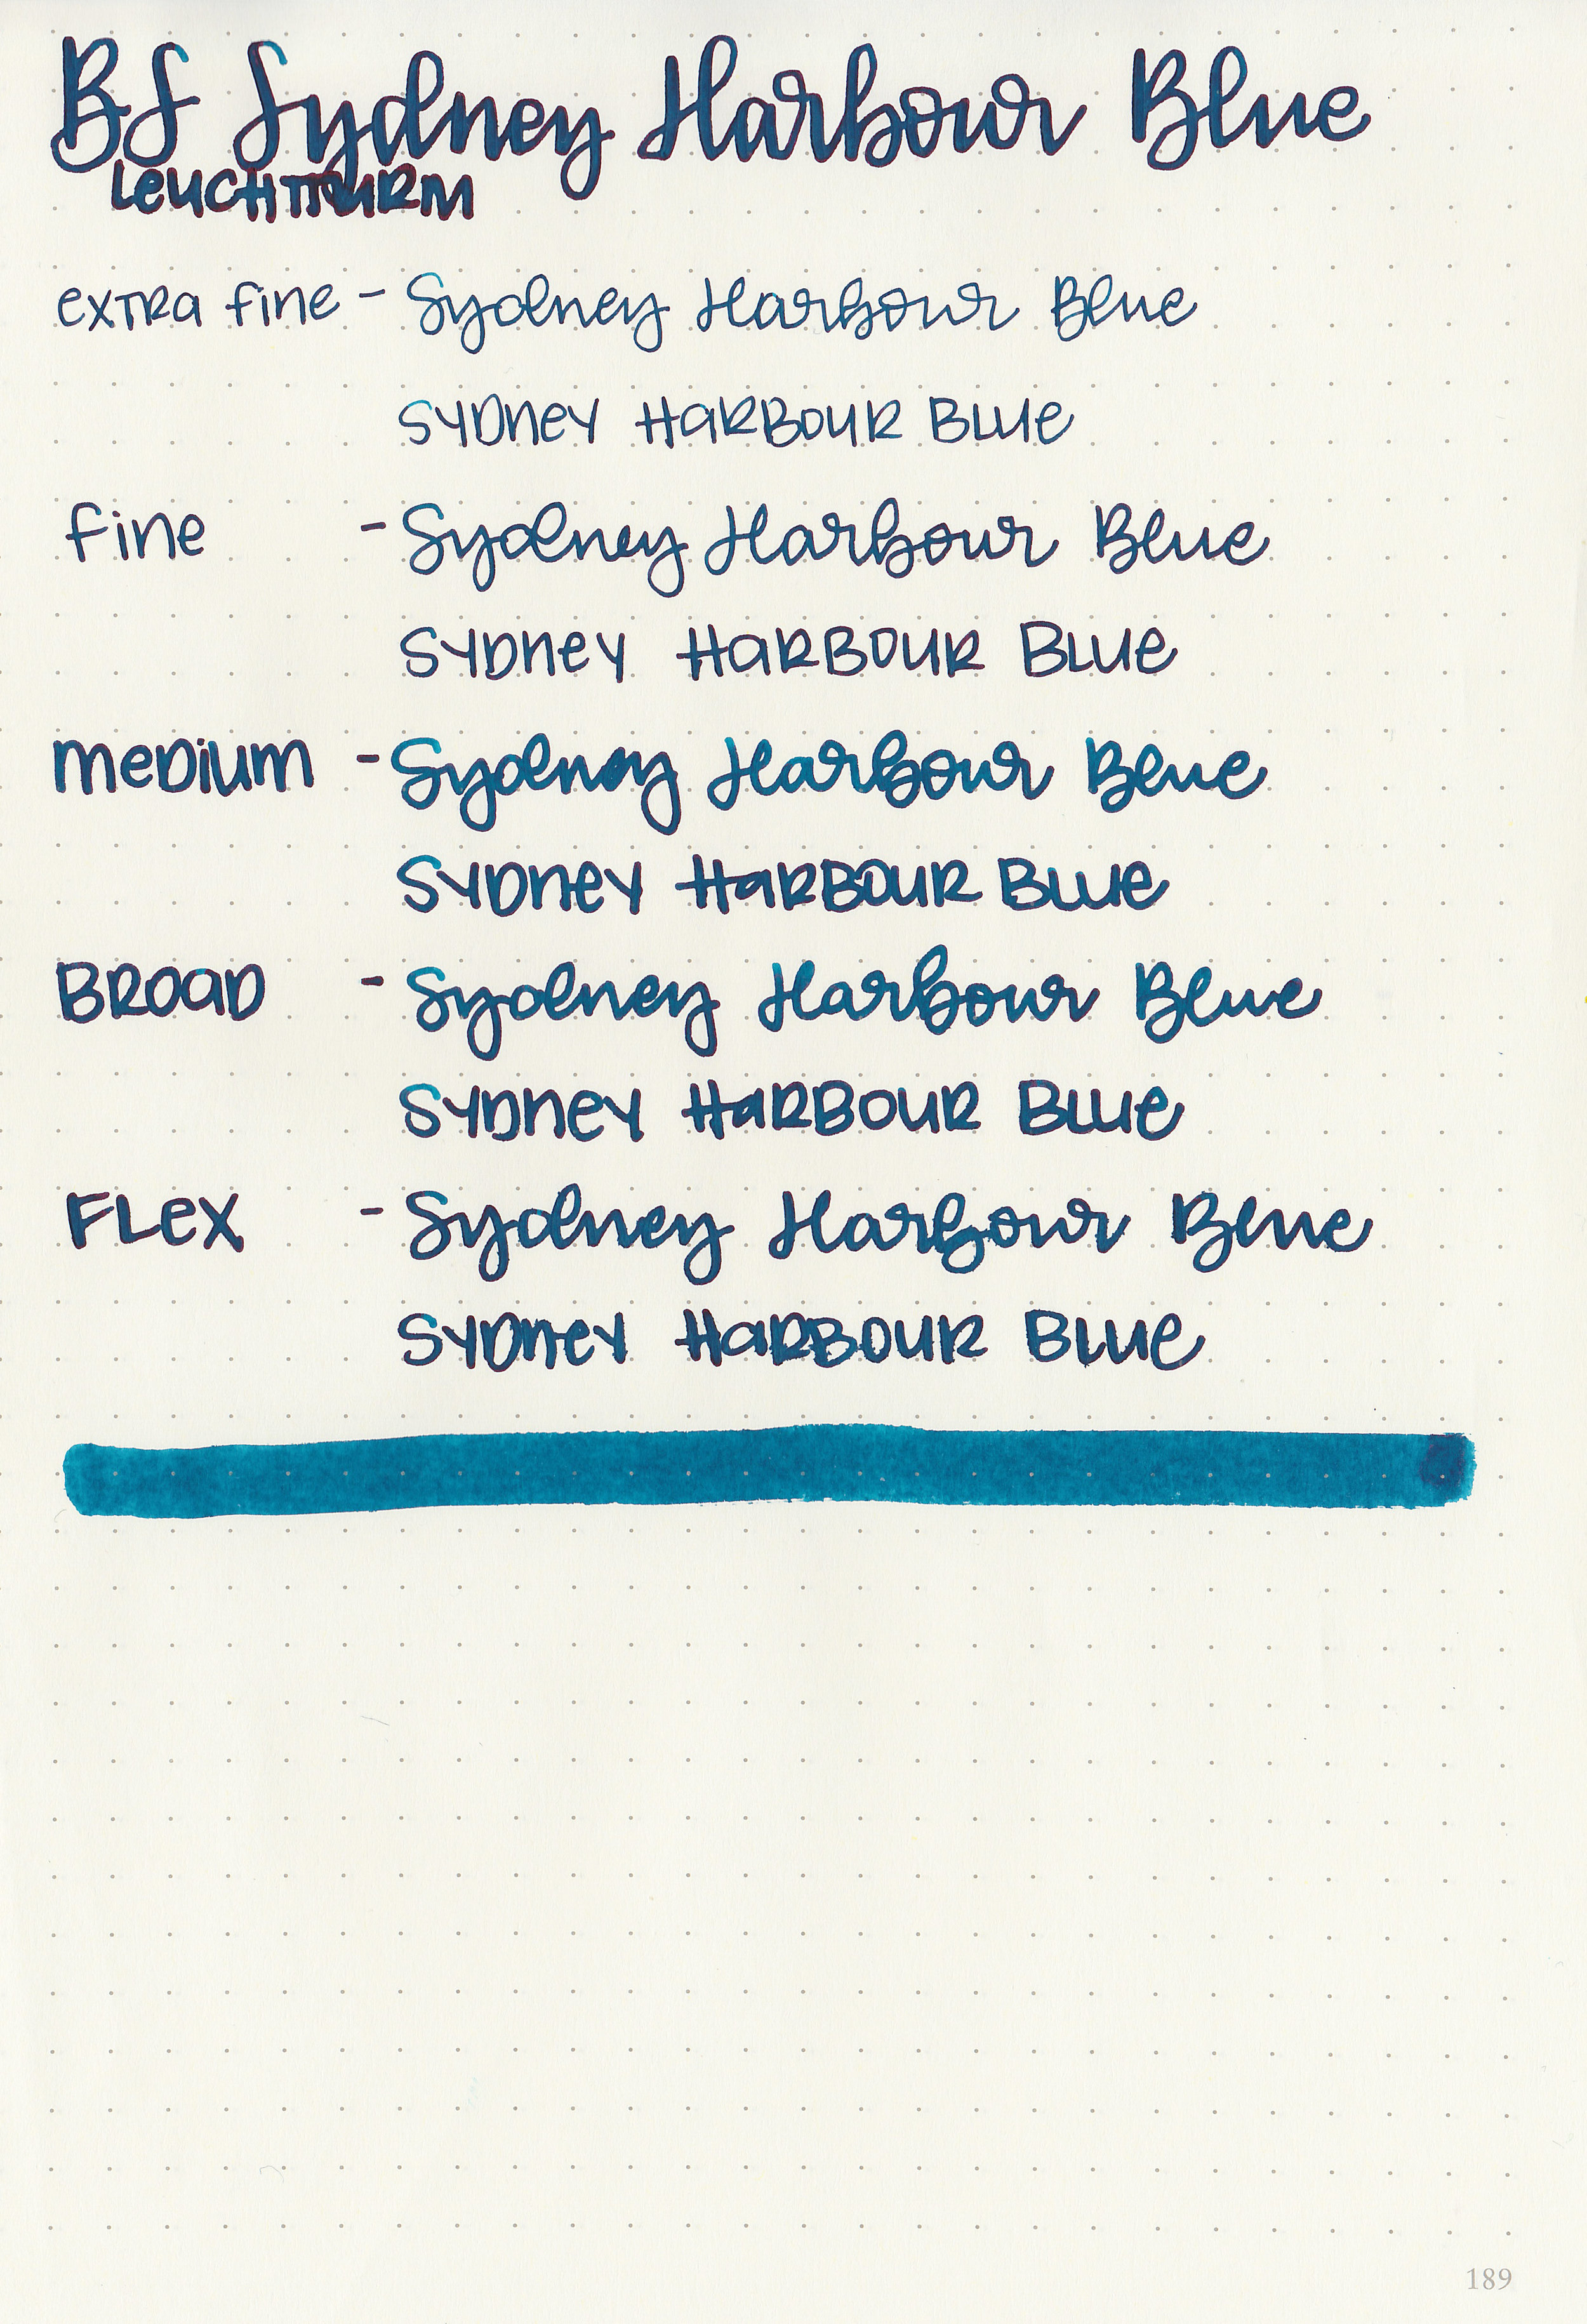 bs-sydney-harbour-blue-9.jpg